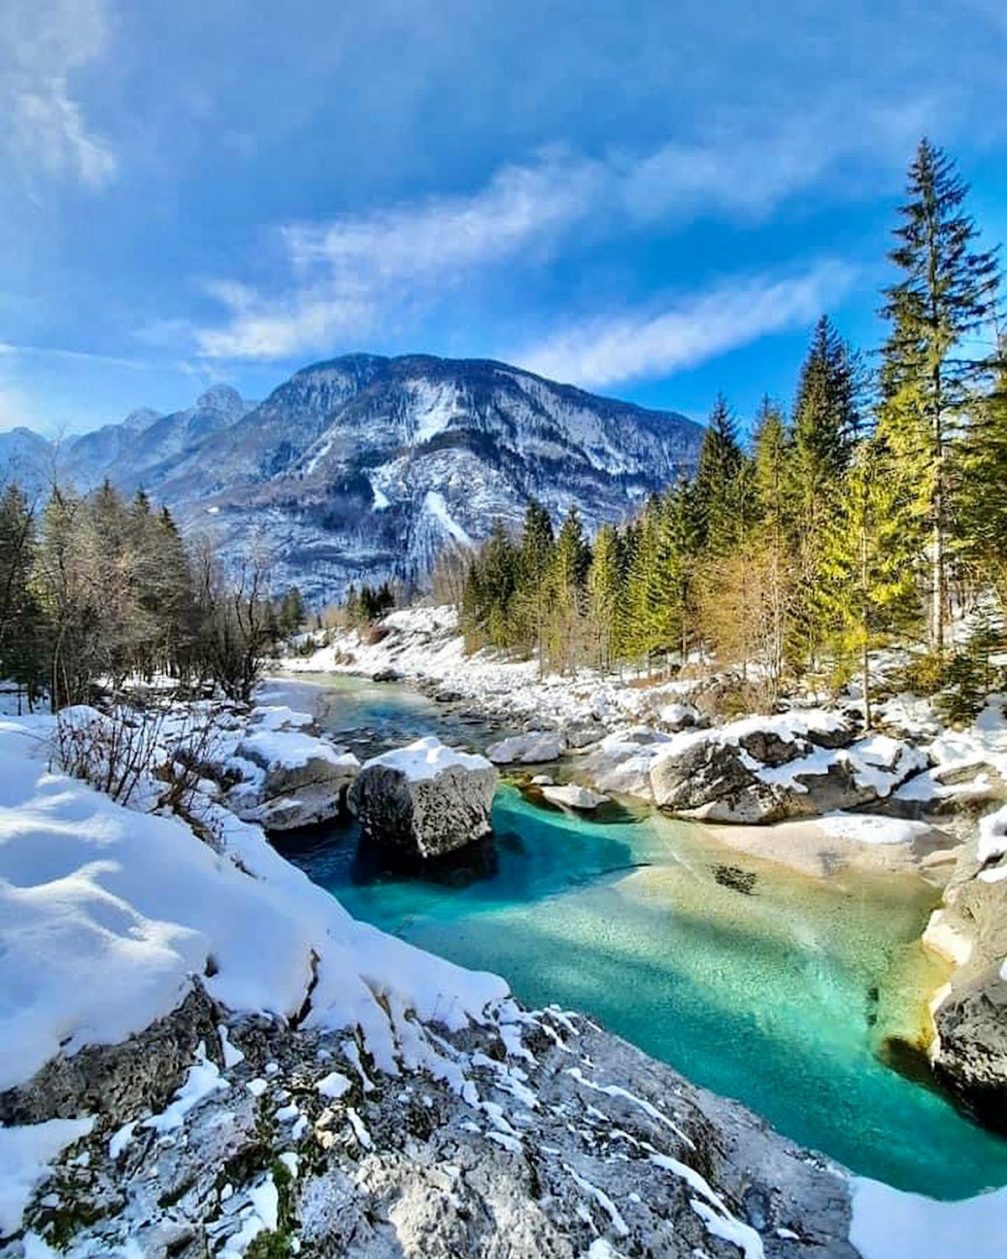 Lepenjica Stream in Lepena Valley, part of Triglav National Park in Slovenia